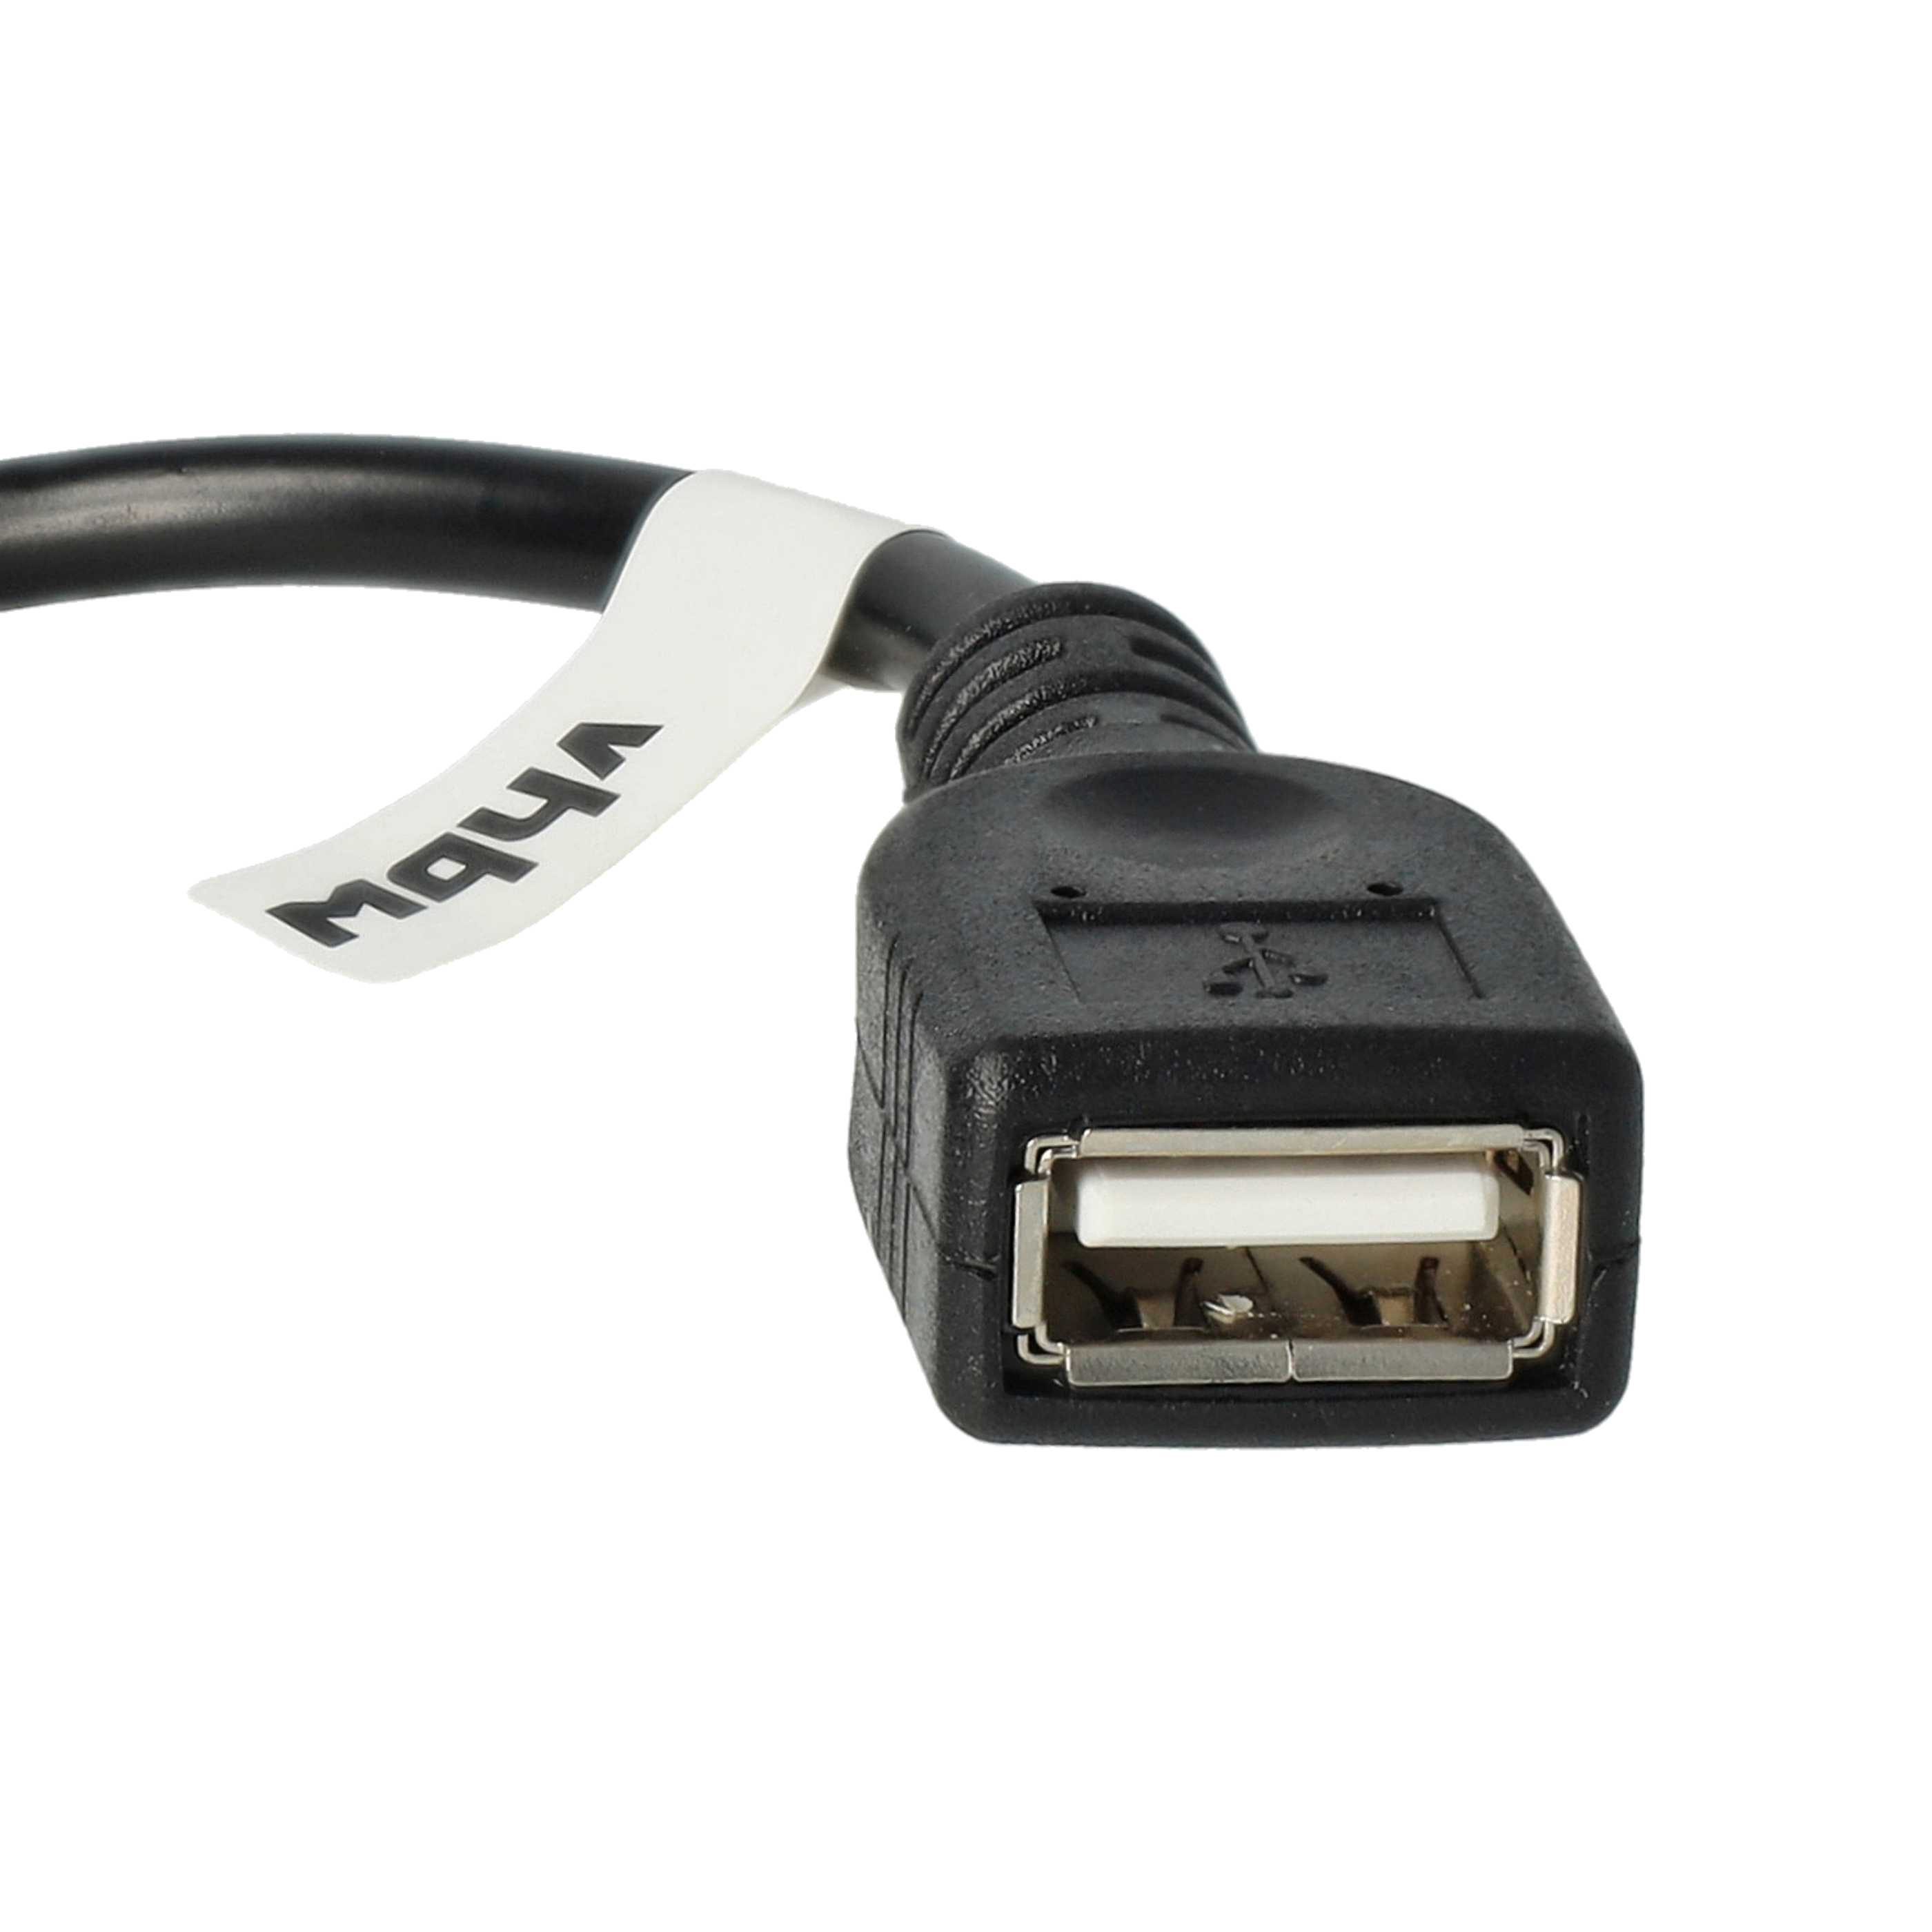 Adattatore OTG daMicro-USB a USB (femmina)a 90° per smartphone, tablet, laptop